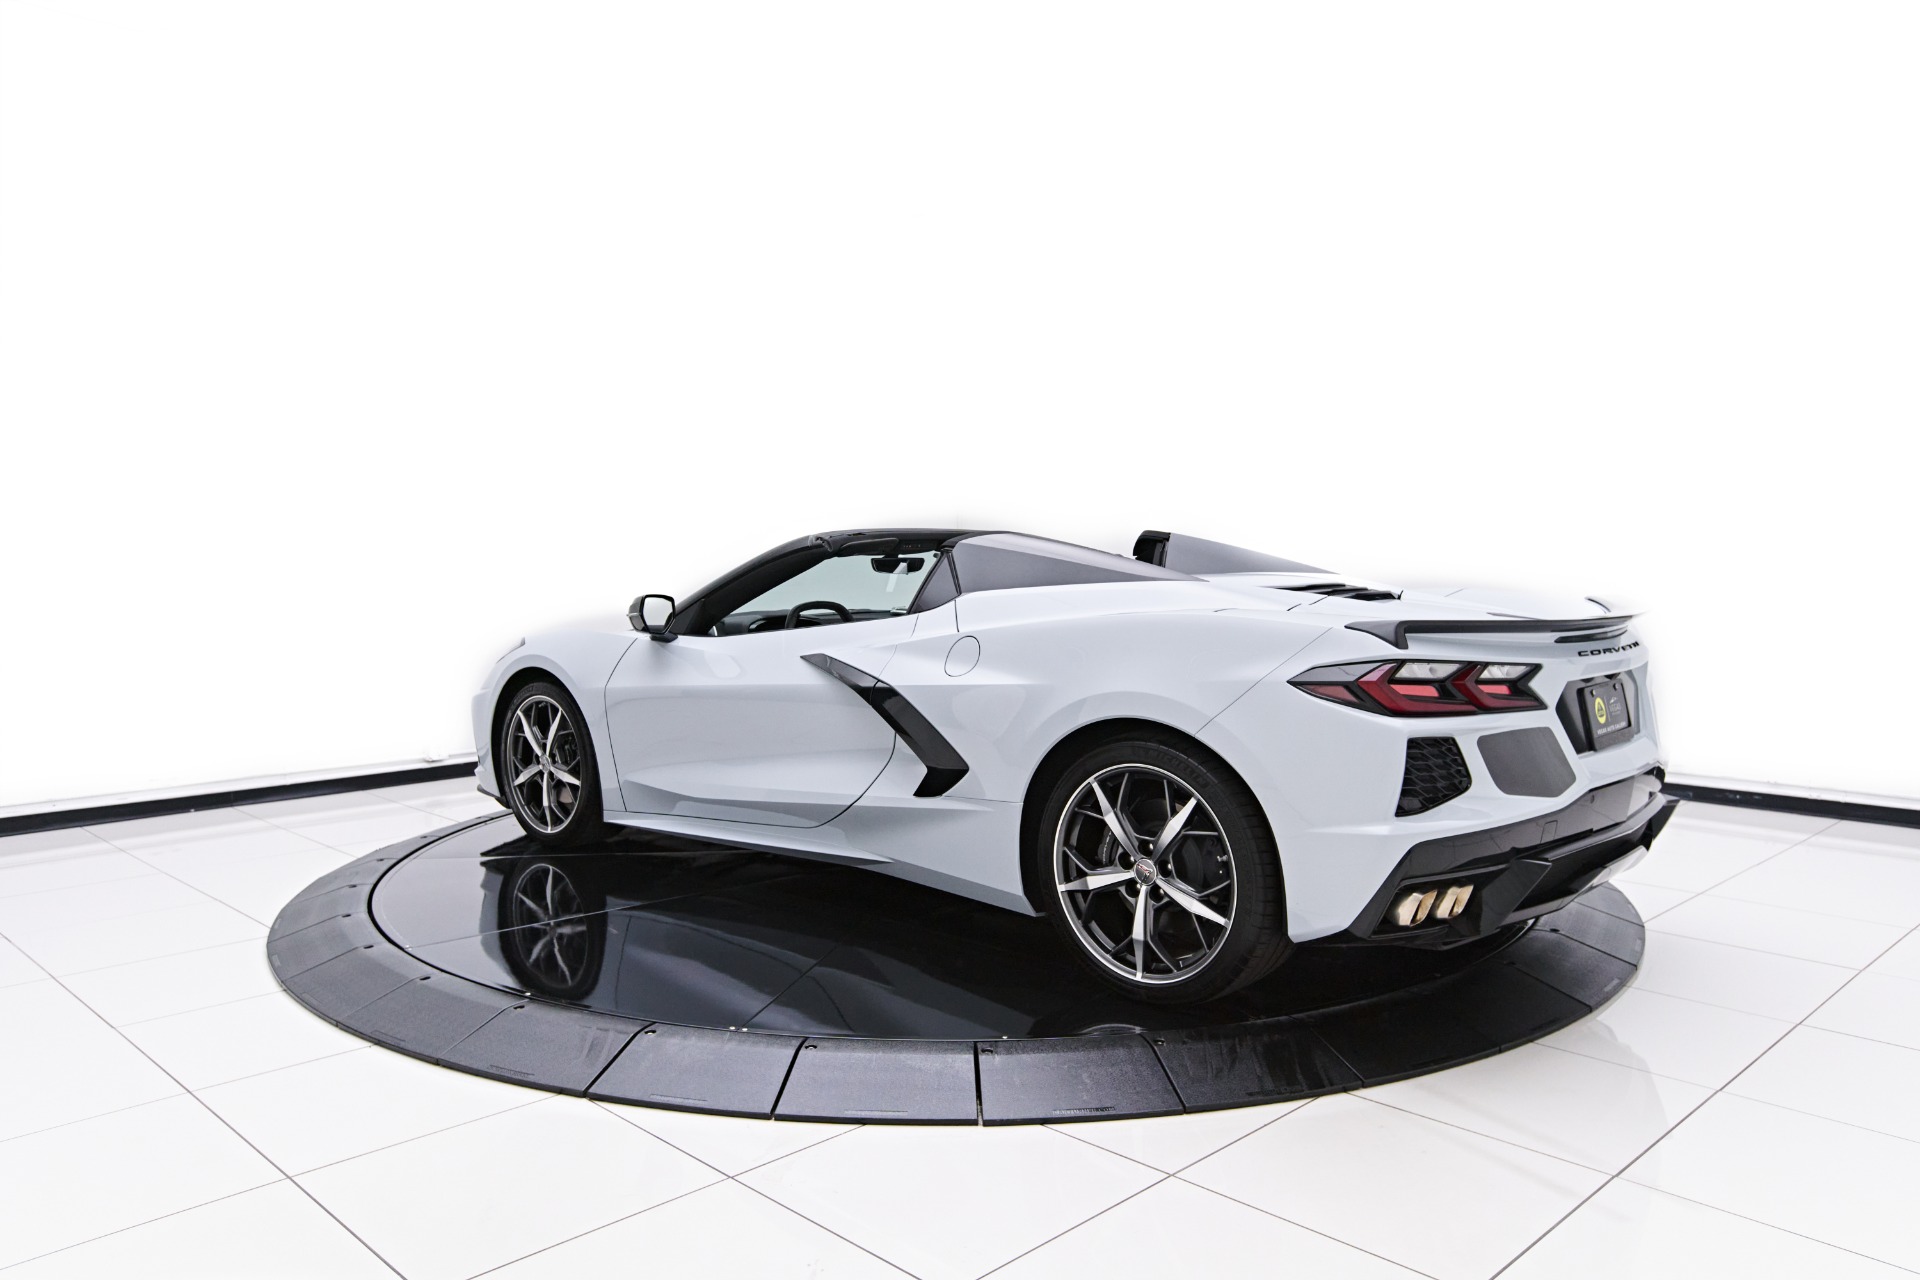 64 Corvette Convertible Build   Car Stereo Forum